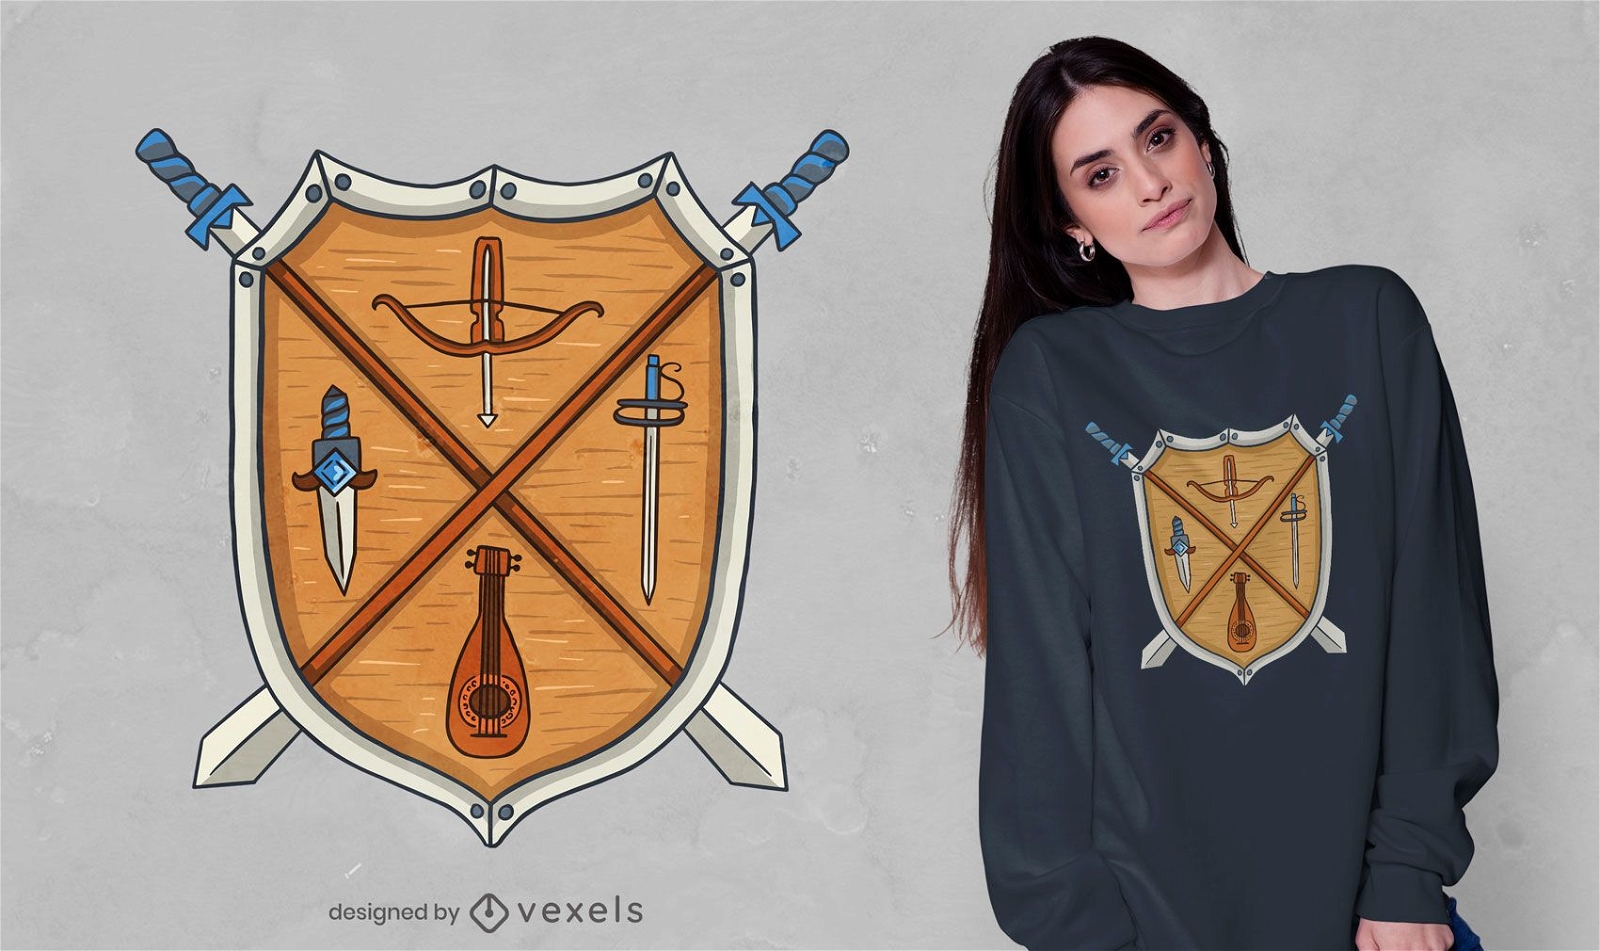 Diseño de camiseta con escudo medieval.